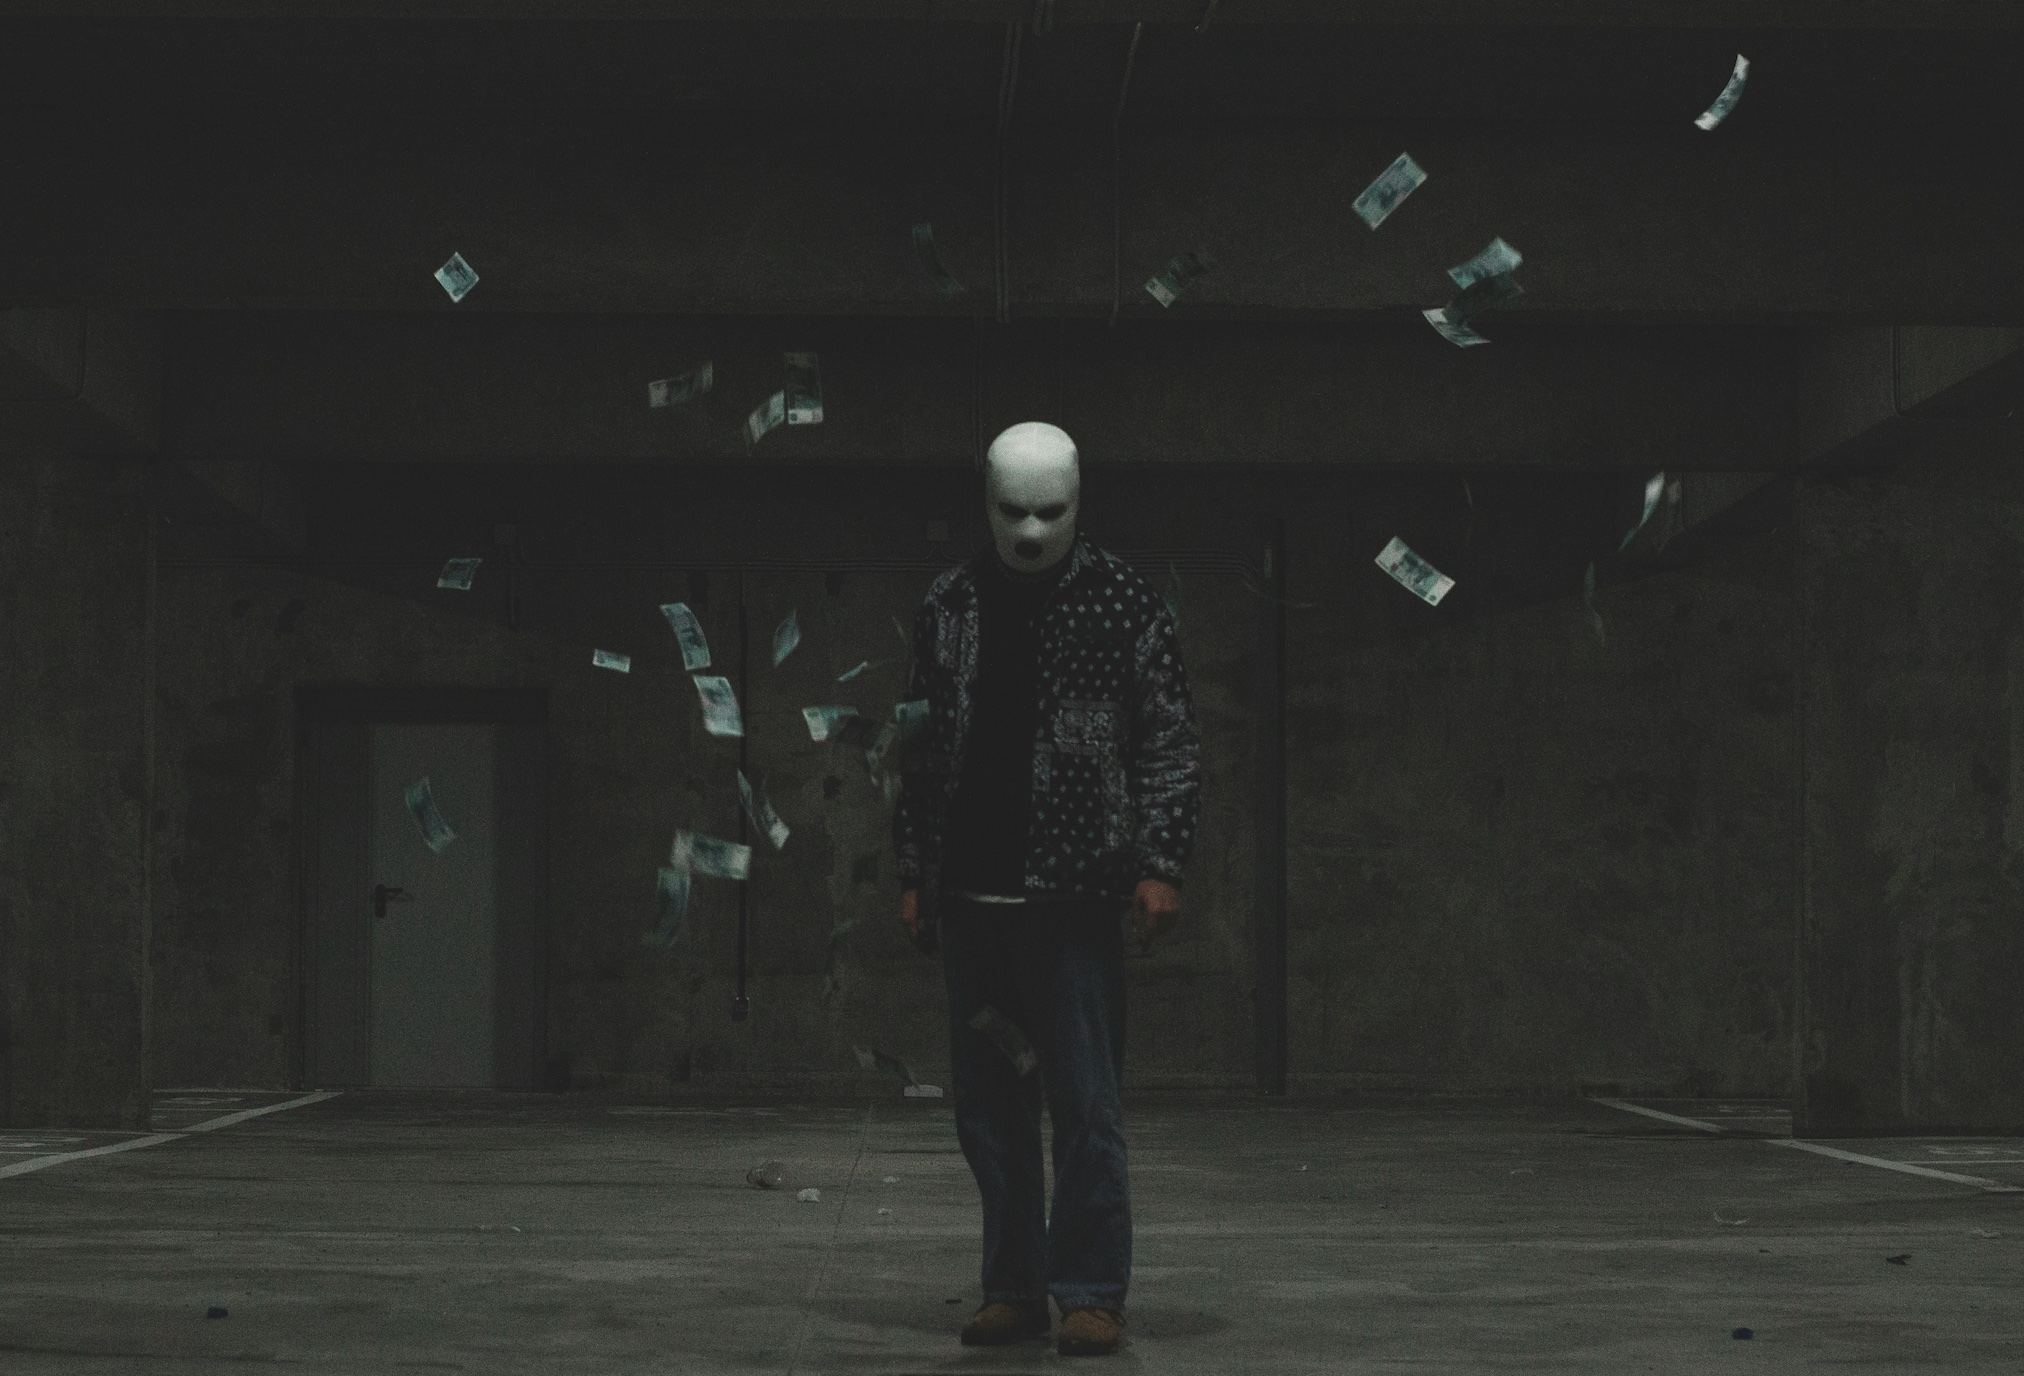 Masked man standing in dark room with paper money falling around him; image by Nikita Pavlov, via Unsplash.com.